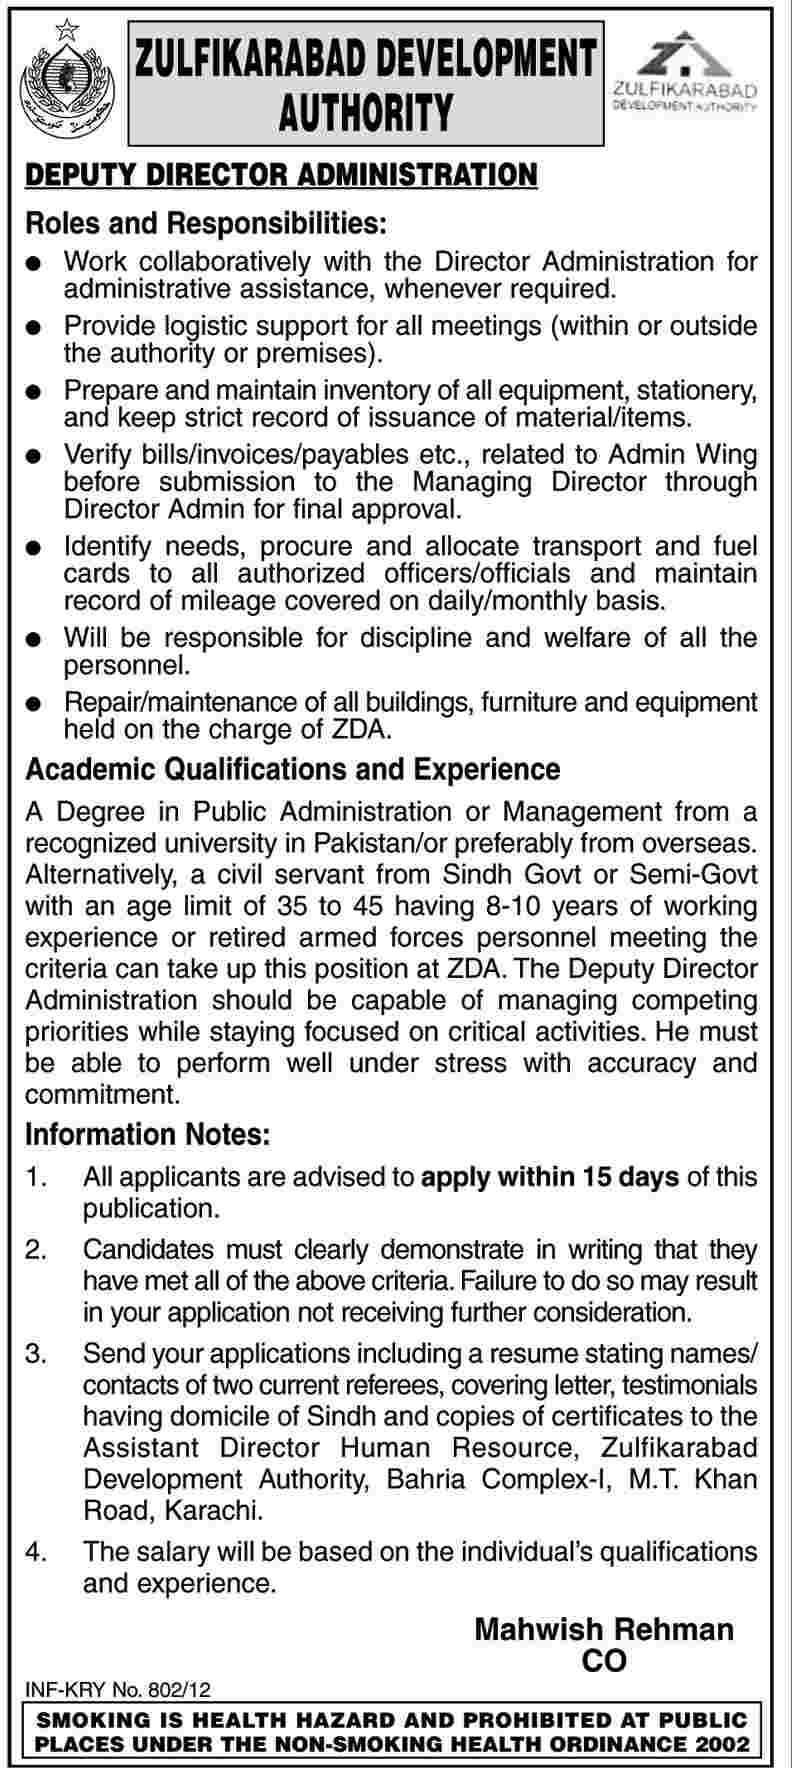 Zulfikarabad Development Authority Required Deputy Director Administration